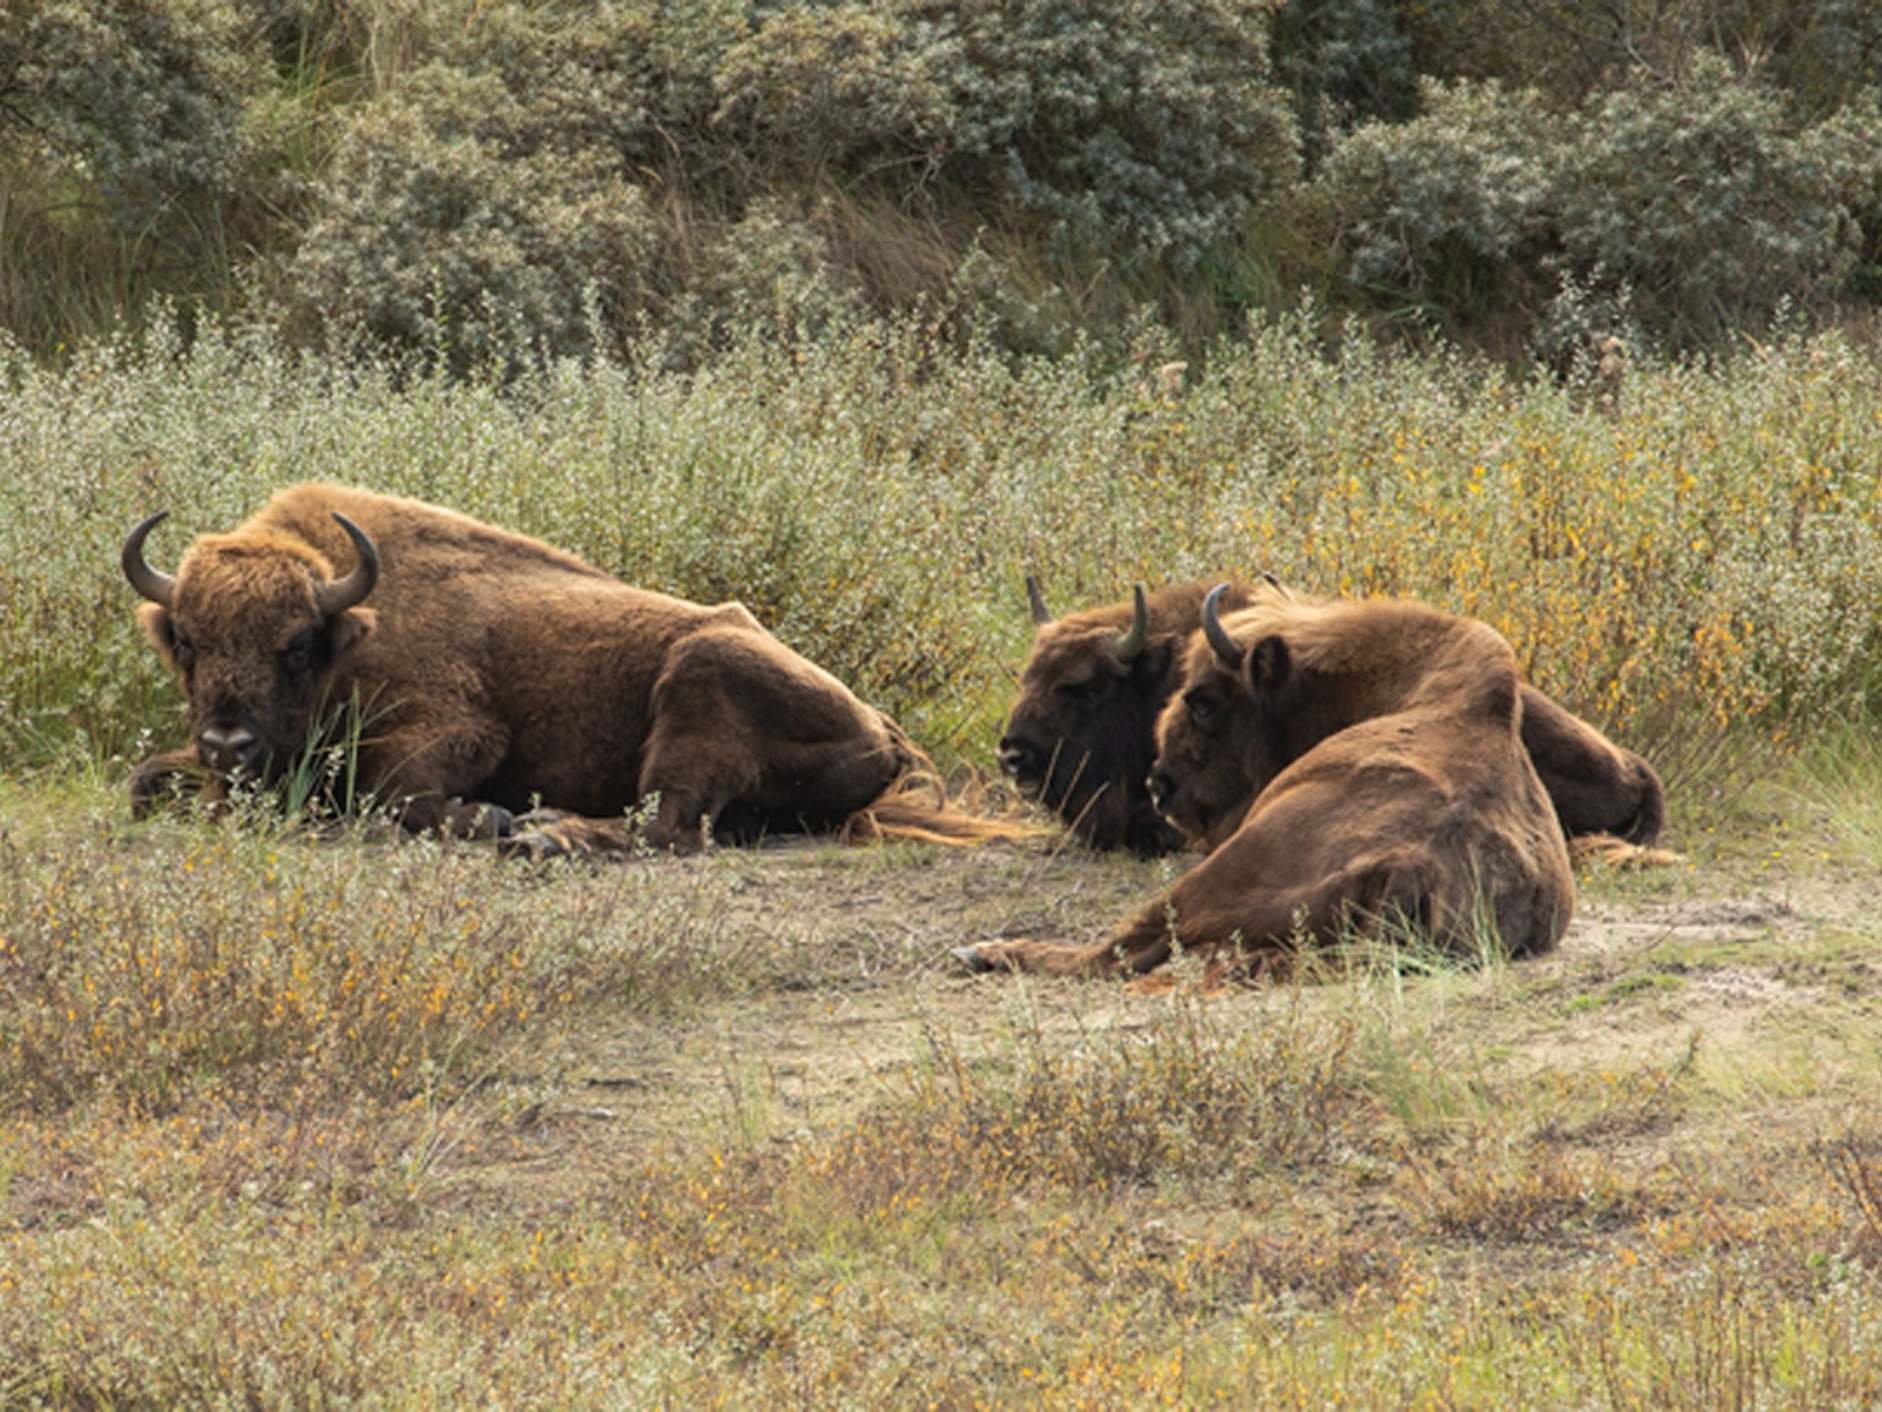 Undated photo showing bison from the Kraansvlak herd in the Netherlands.